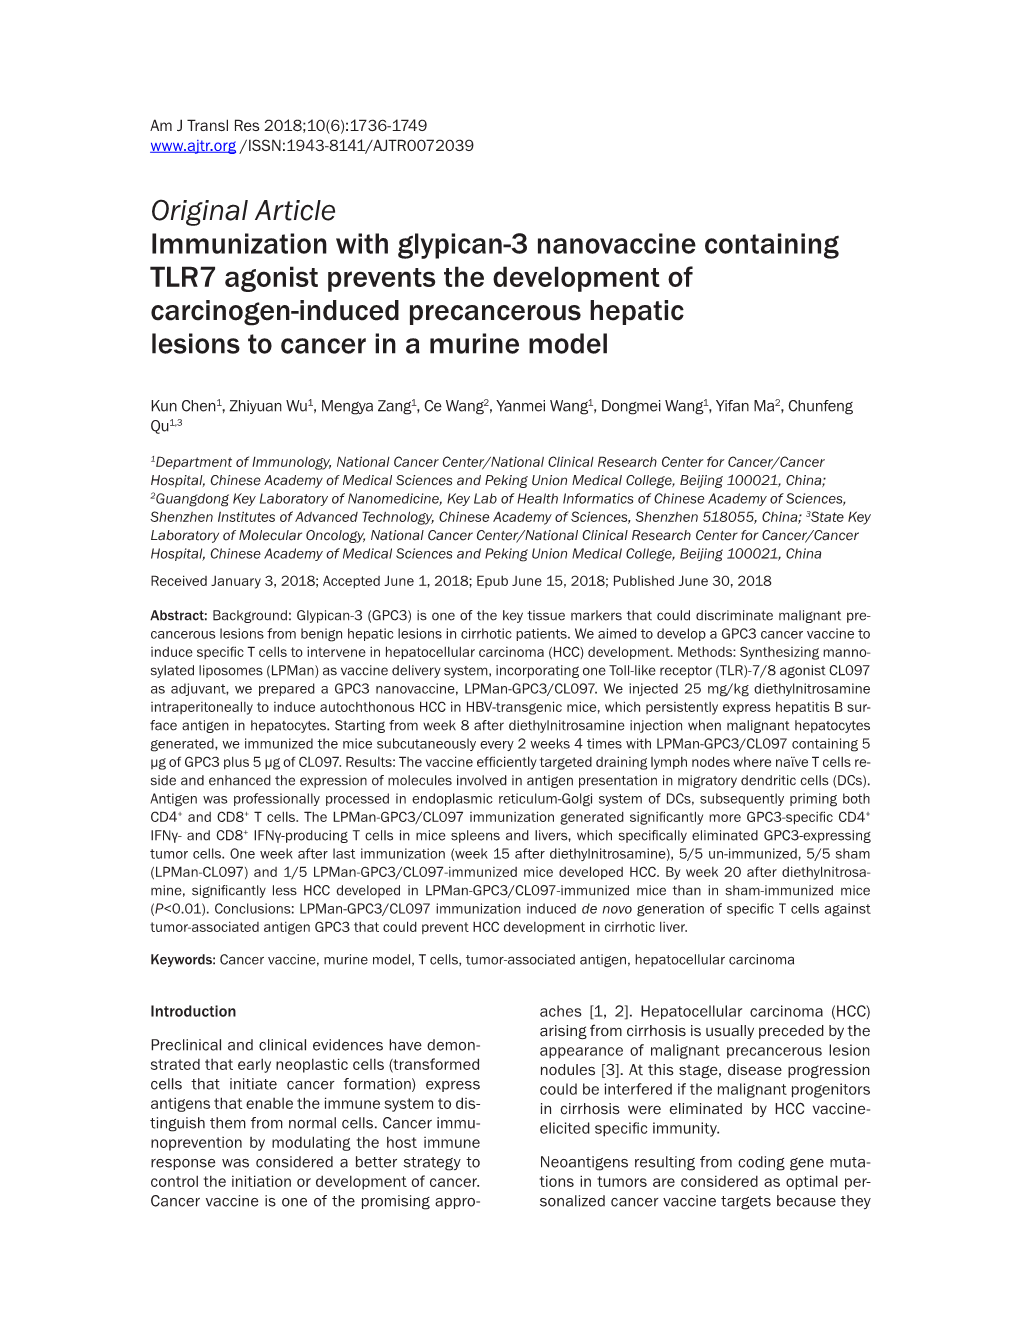 Original Article Immunization with Glypican-3 Nanovaccine Containing